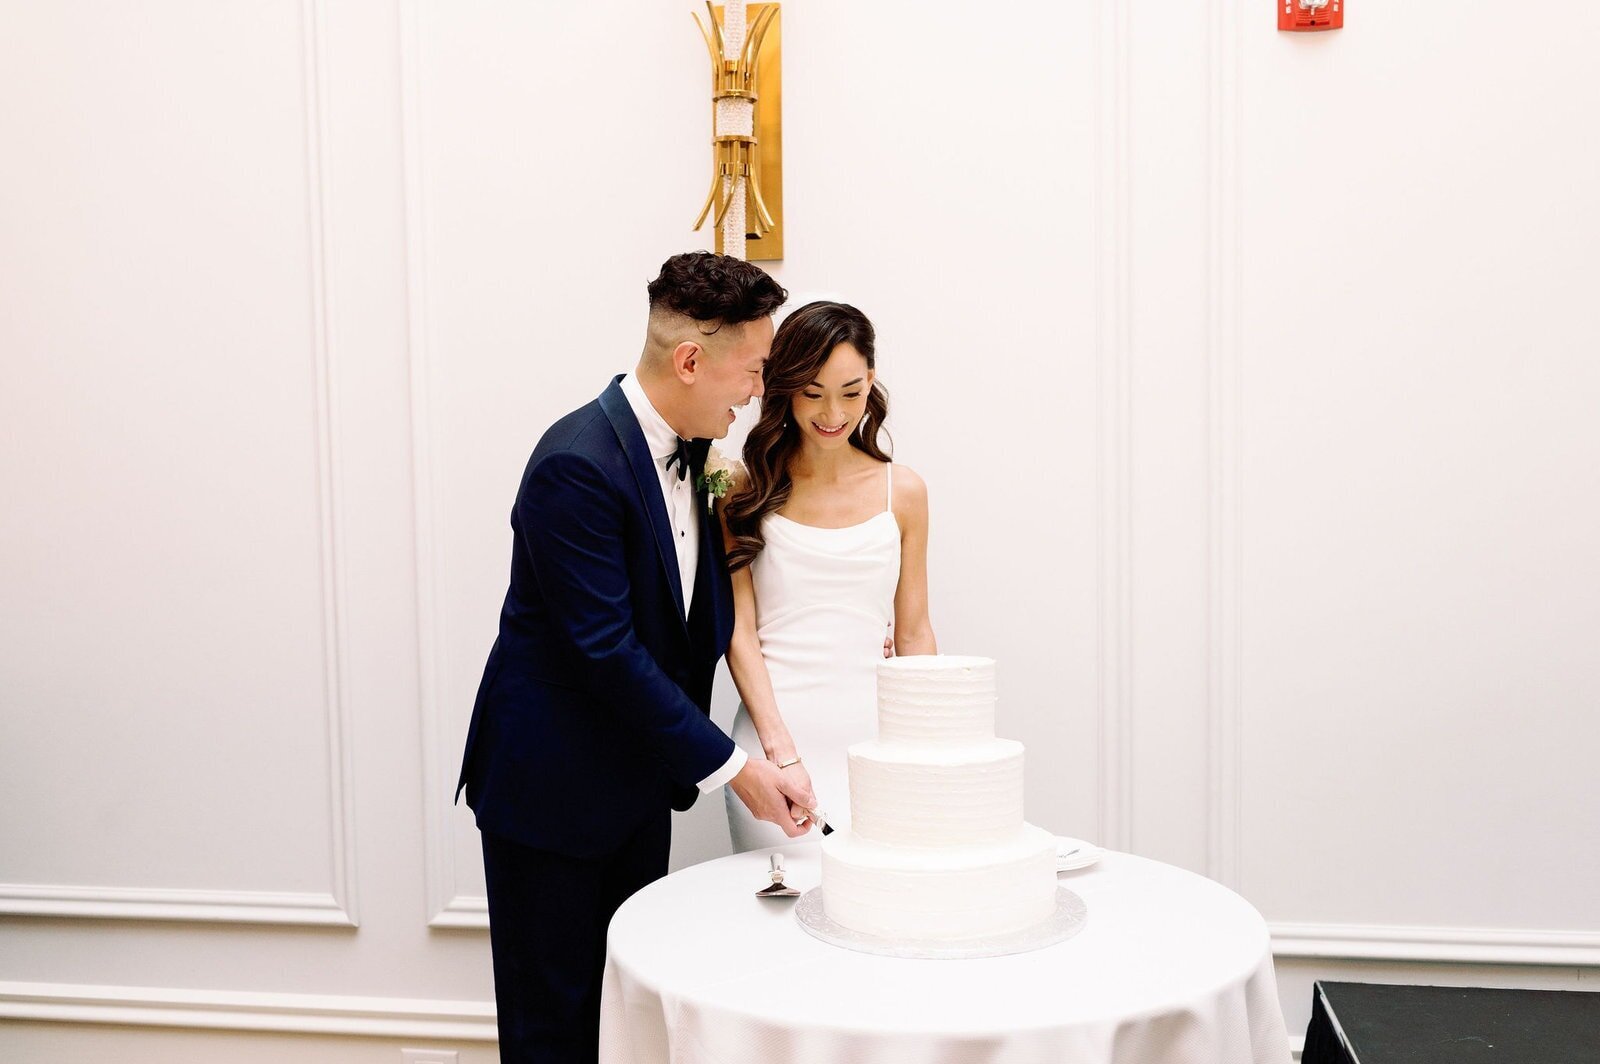 Reception Couple Cuts Wedding Cake Happiness at Arlington Estate Vaughan Toronto Wedding Venue Jacqueline james Photography